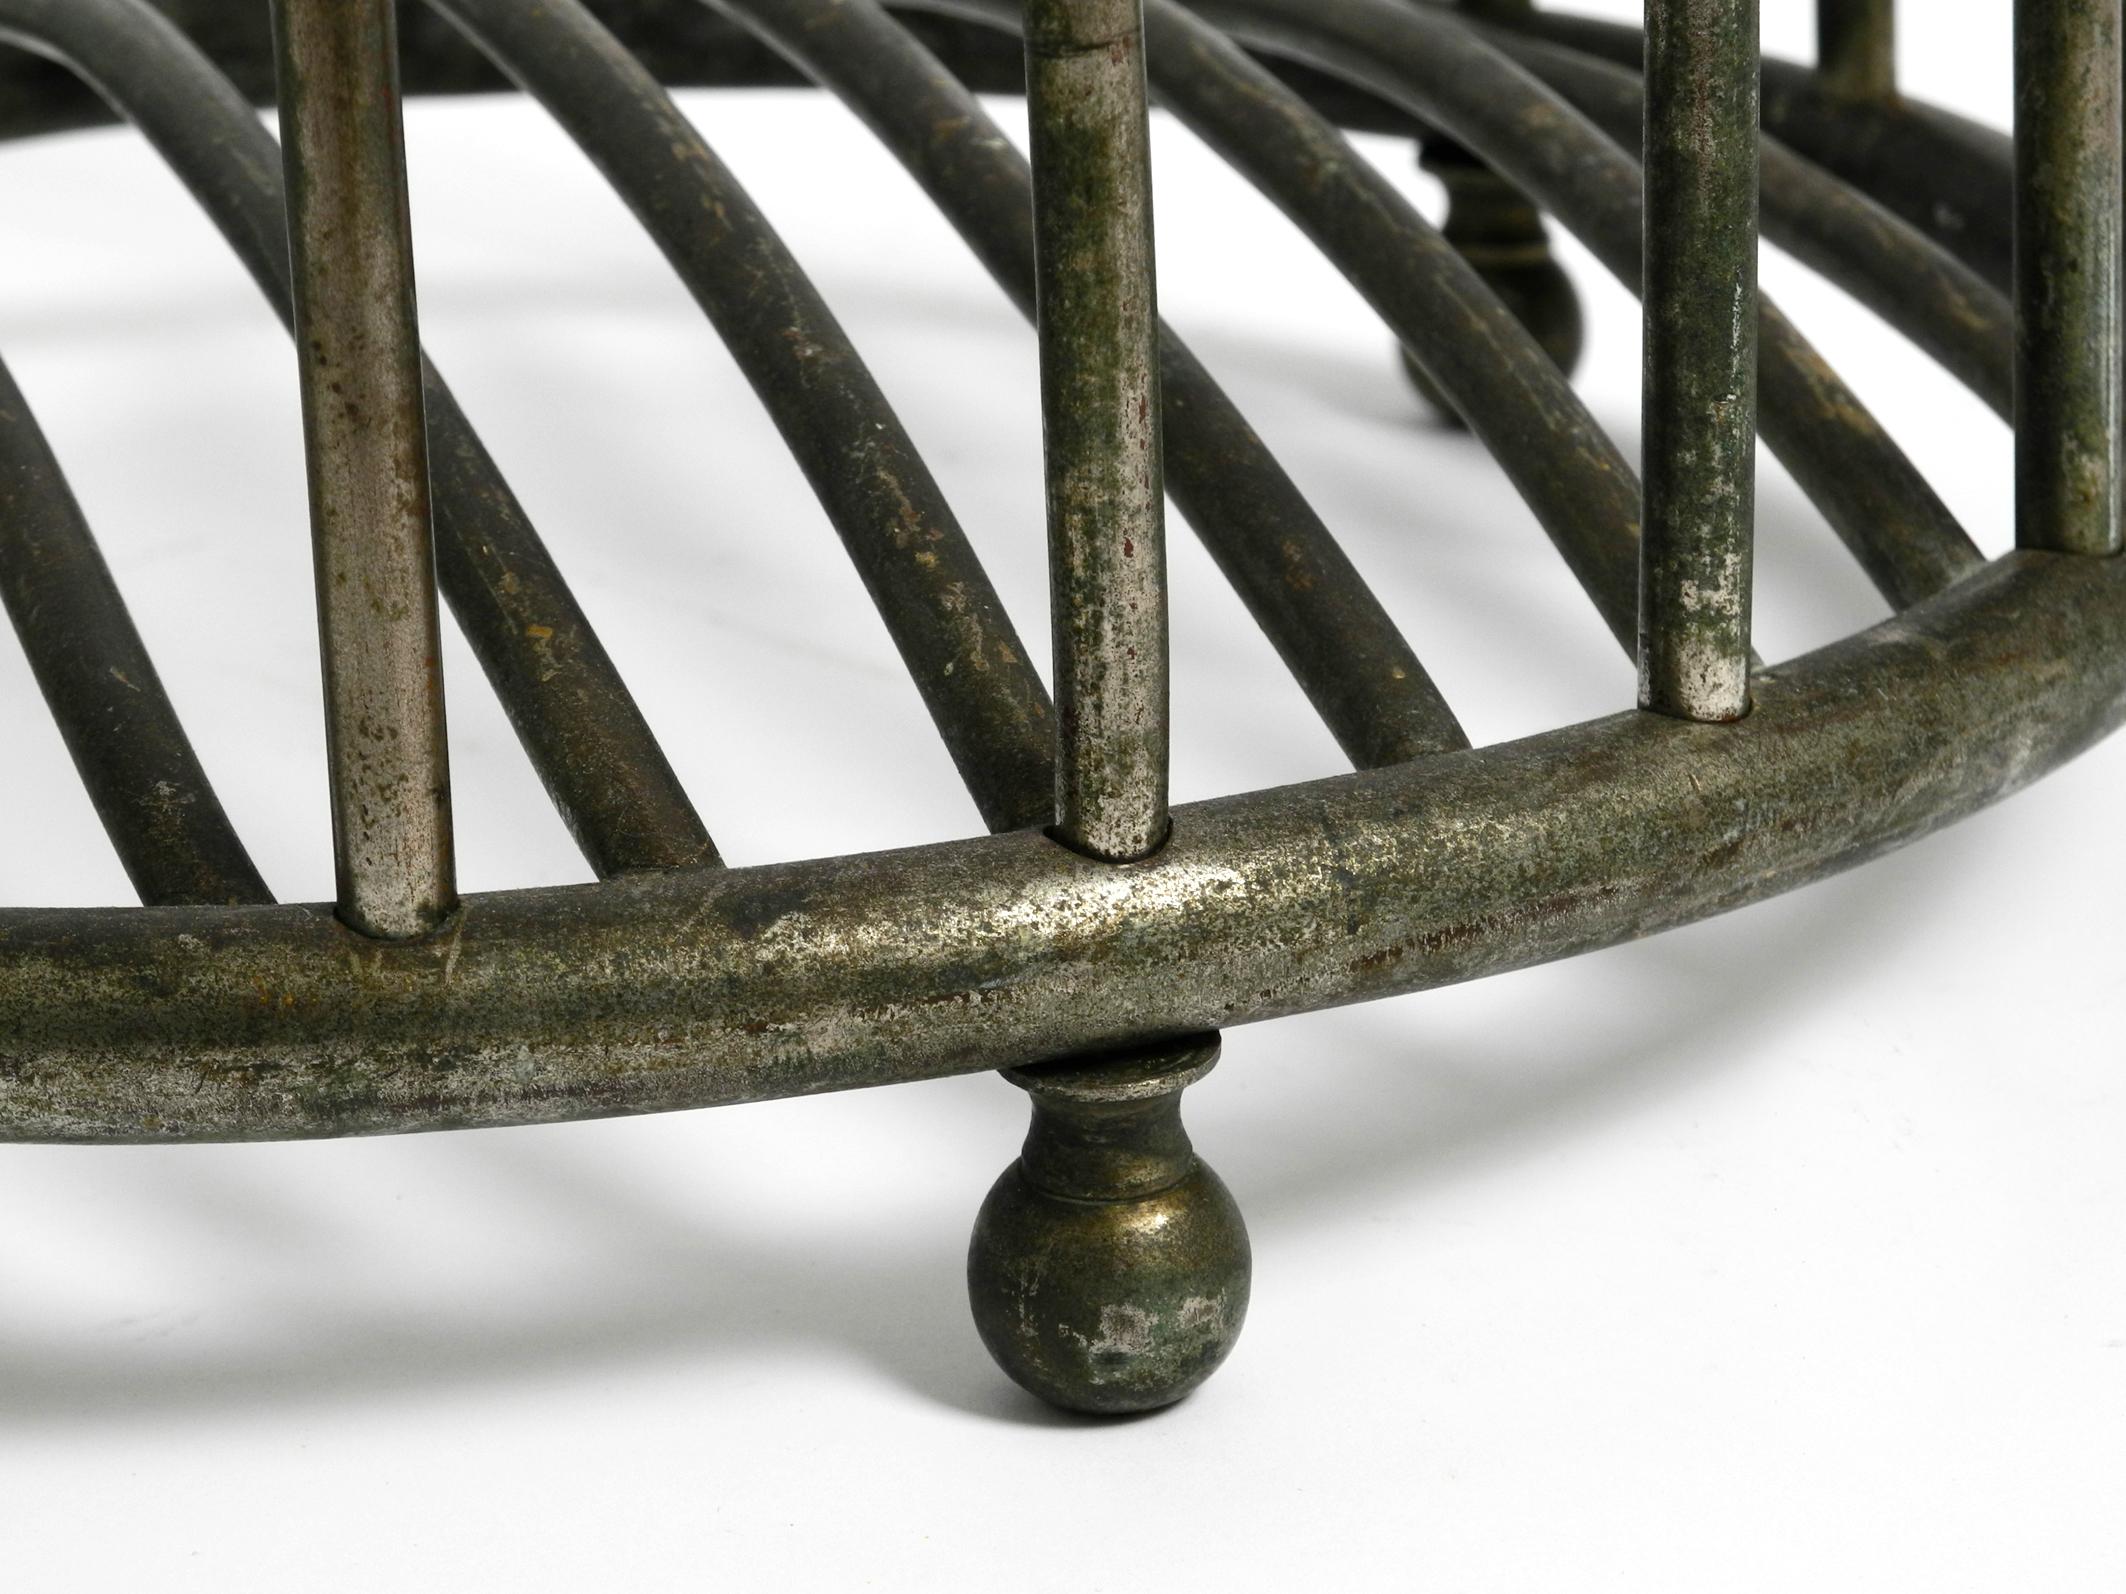 Original Mott's Plumbing Towel Basket Made of Nickel-Plated Brass from the 1910s 2